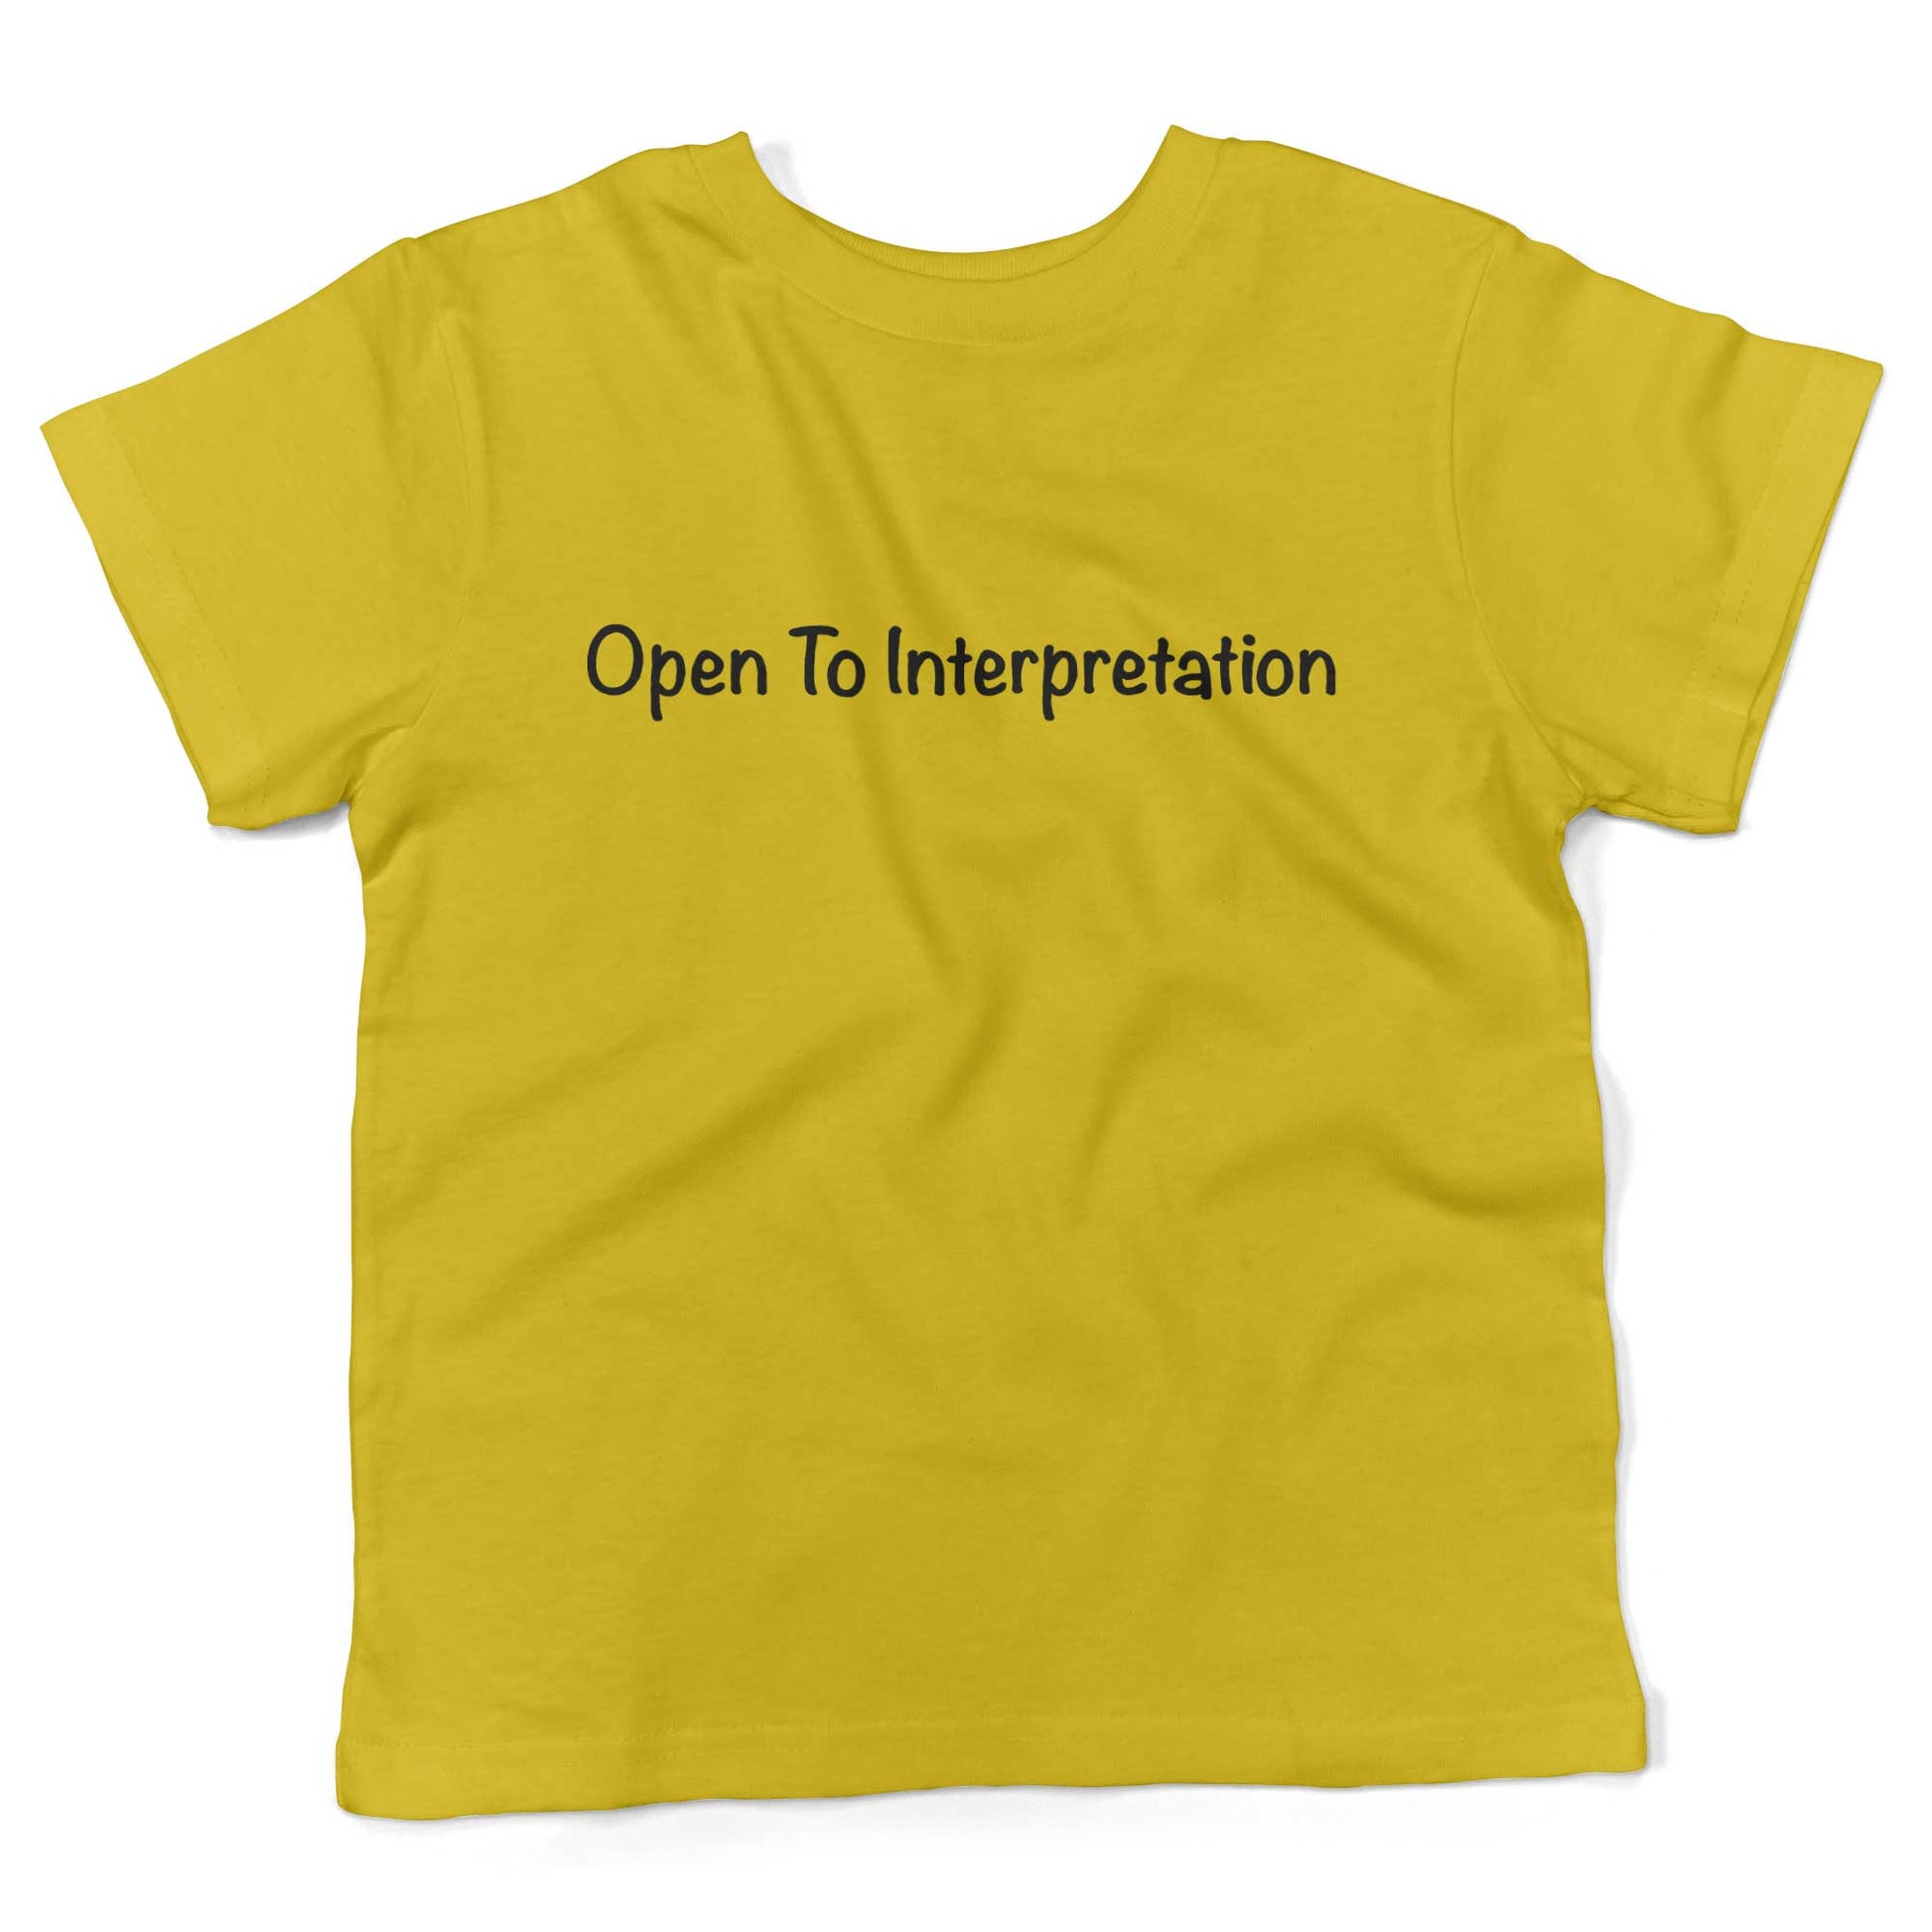 Open To Interpretation Toddler Shirt-Sunshine Yellow-2T